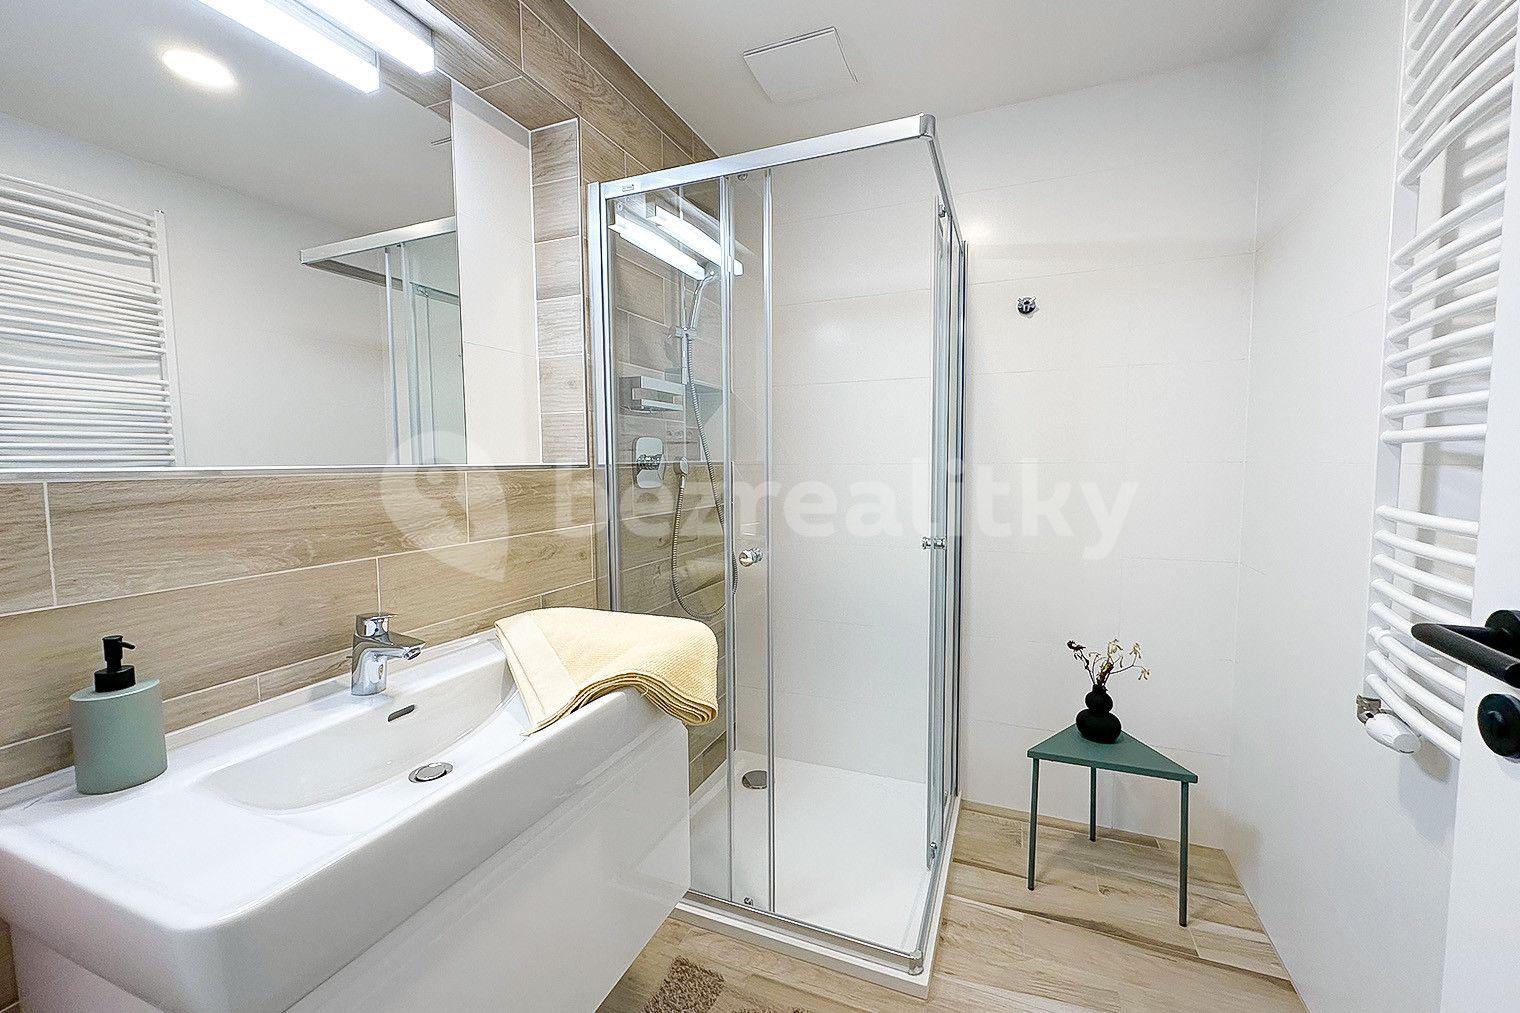 3 bedroom flat to rent, 90 m², U Pergamenky, Prague, Prague